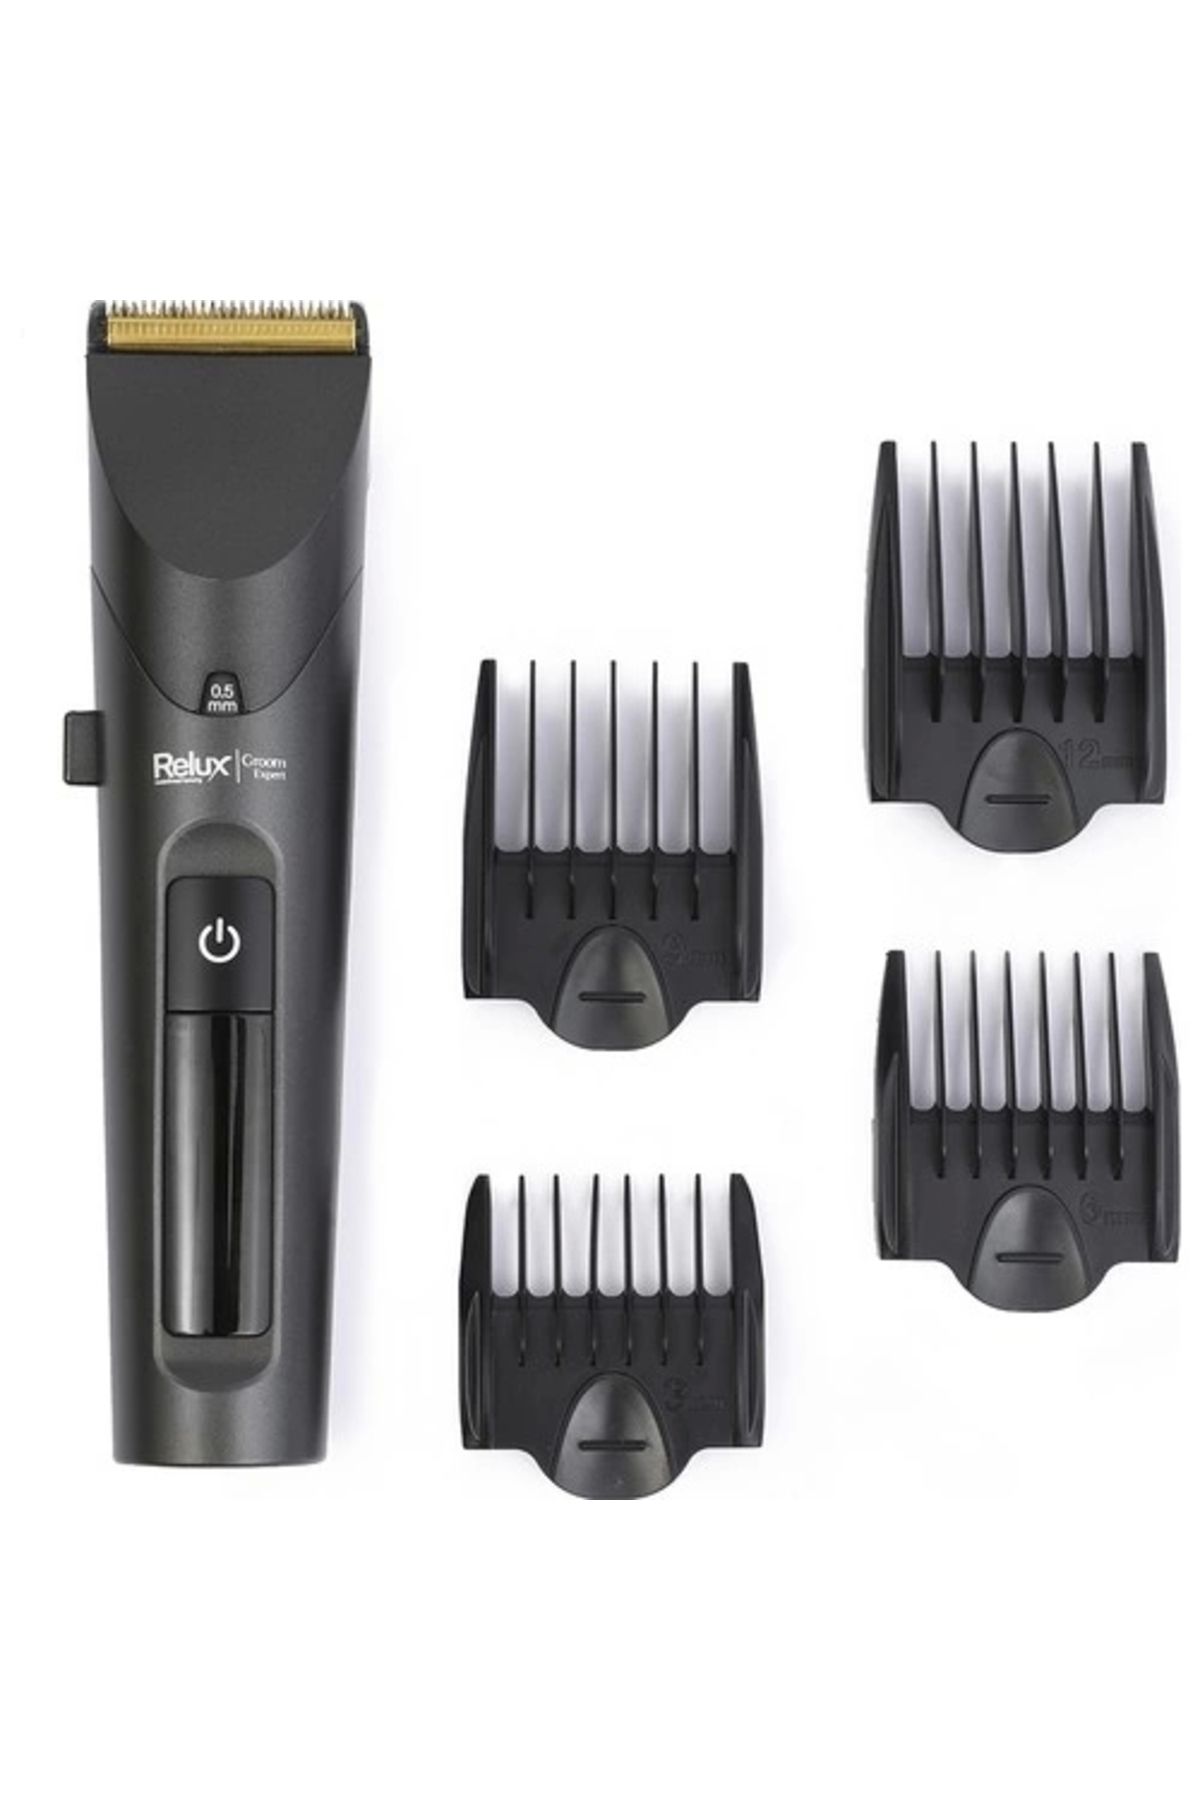 Relux Rhc6800 Groom Expert Su Geçirmez Saç Sakal Kesme Makinesi